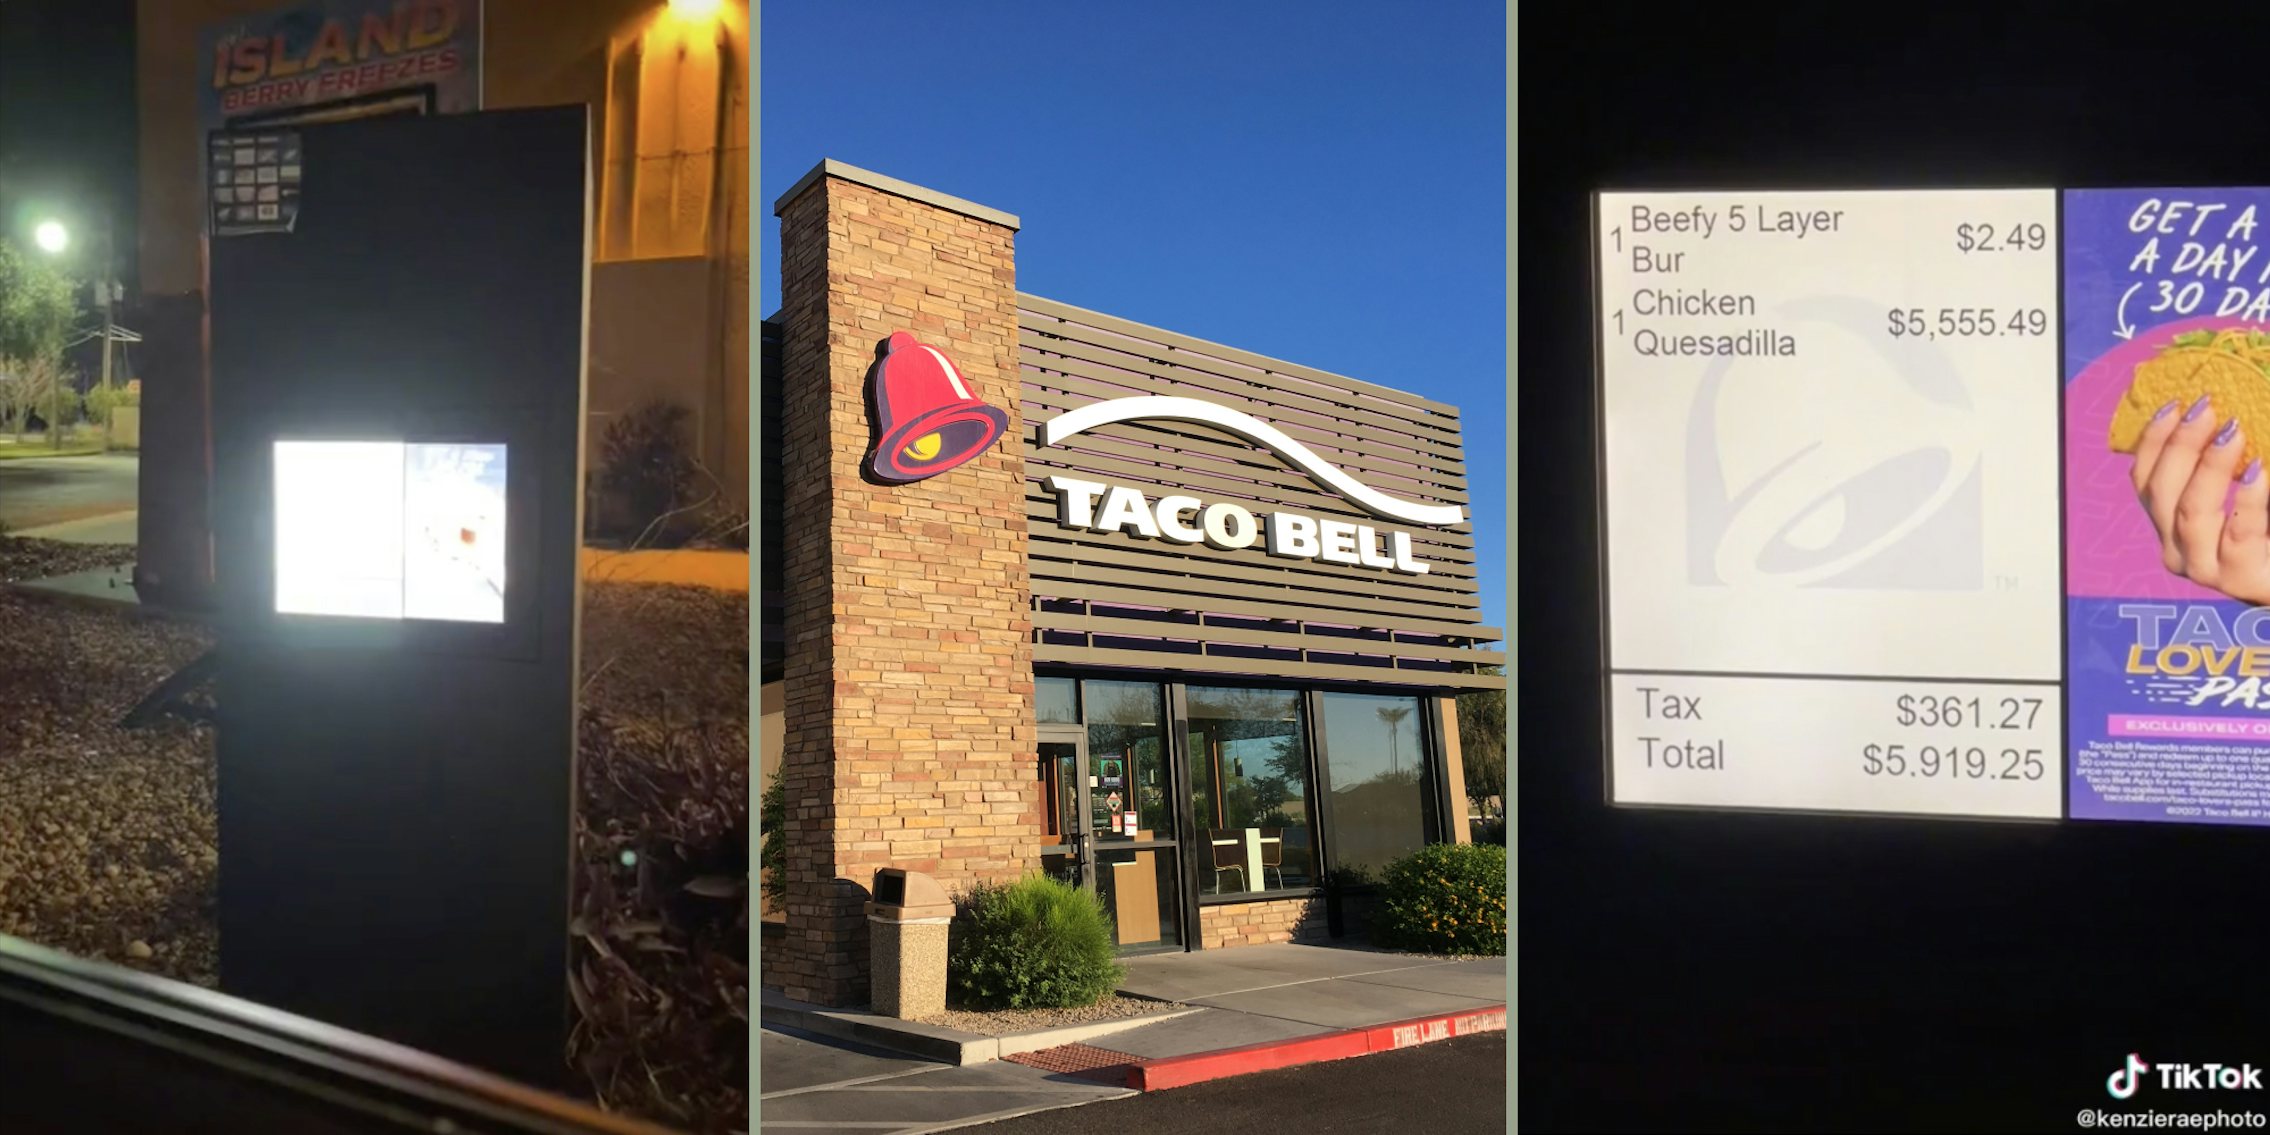 Driver-thru screen (L) Taco Bell restaurant (M), Taco Bell drive-thru order totaling $5,919 (R)